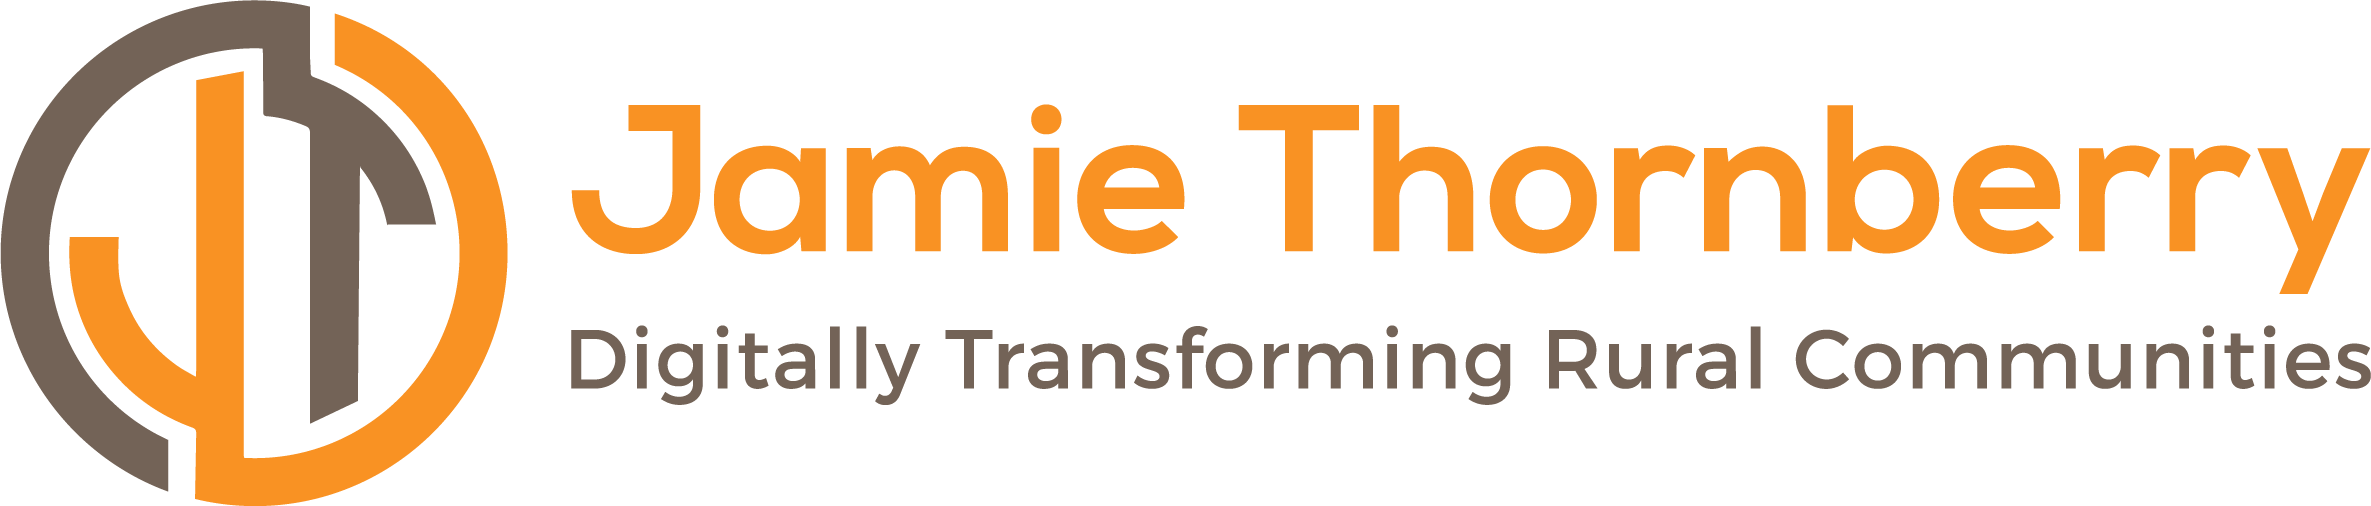 Jamie Thornberry logo